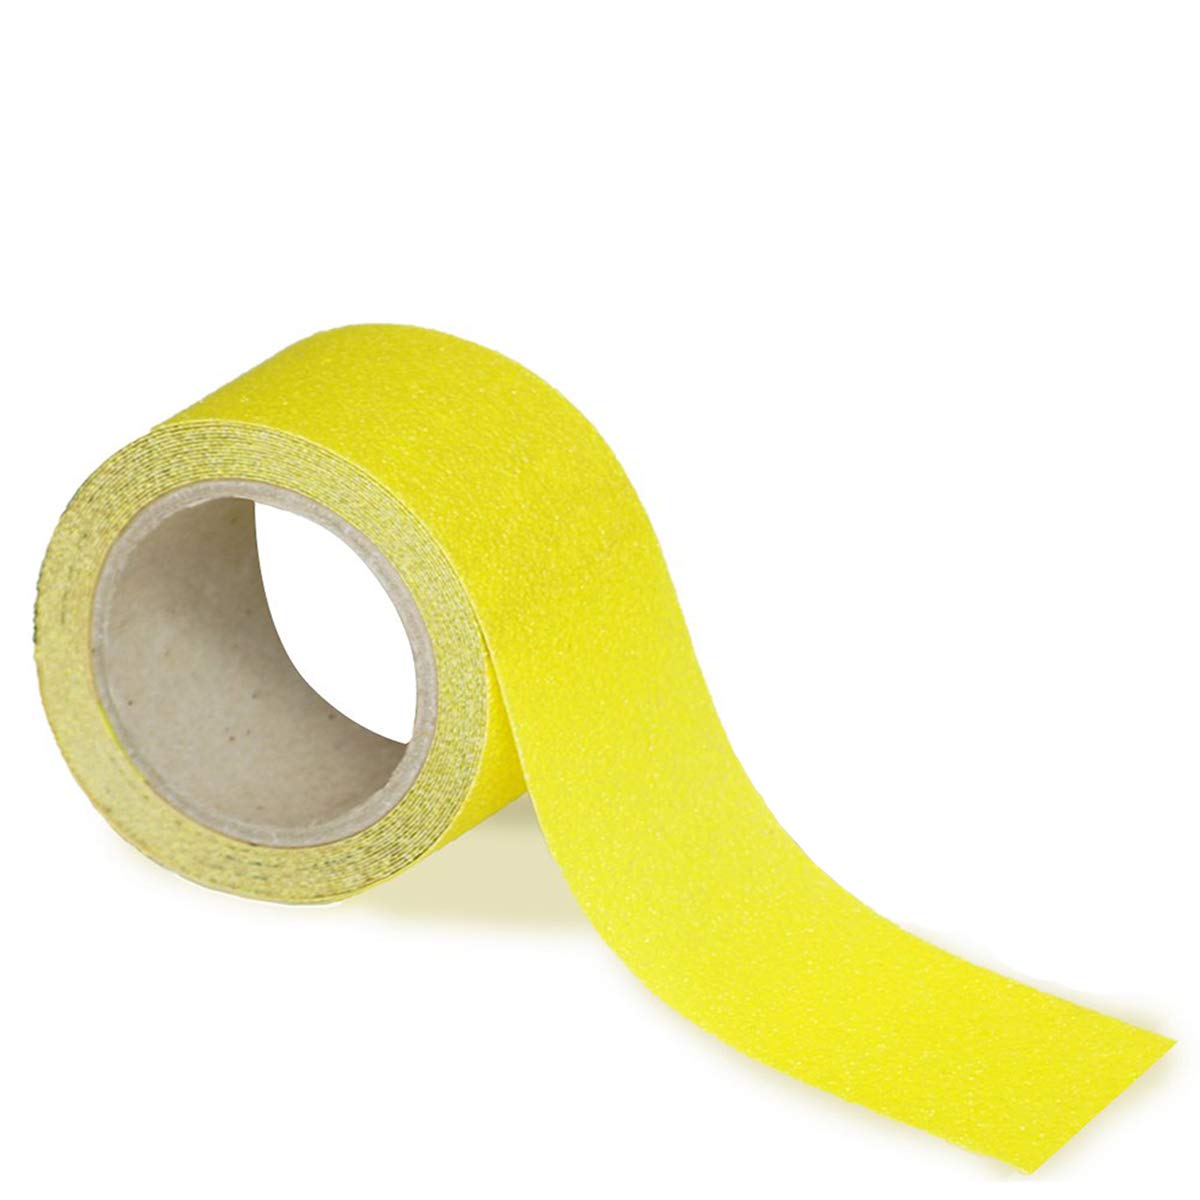 Lifekrafts Anti Slip Tape | PEVA tape | Good Grip, Friction | Safety Anti Skid Tapes for Slippery floors